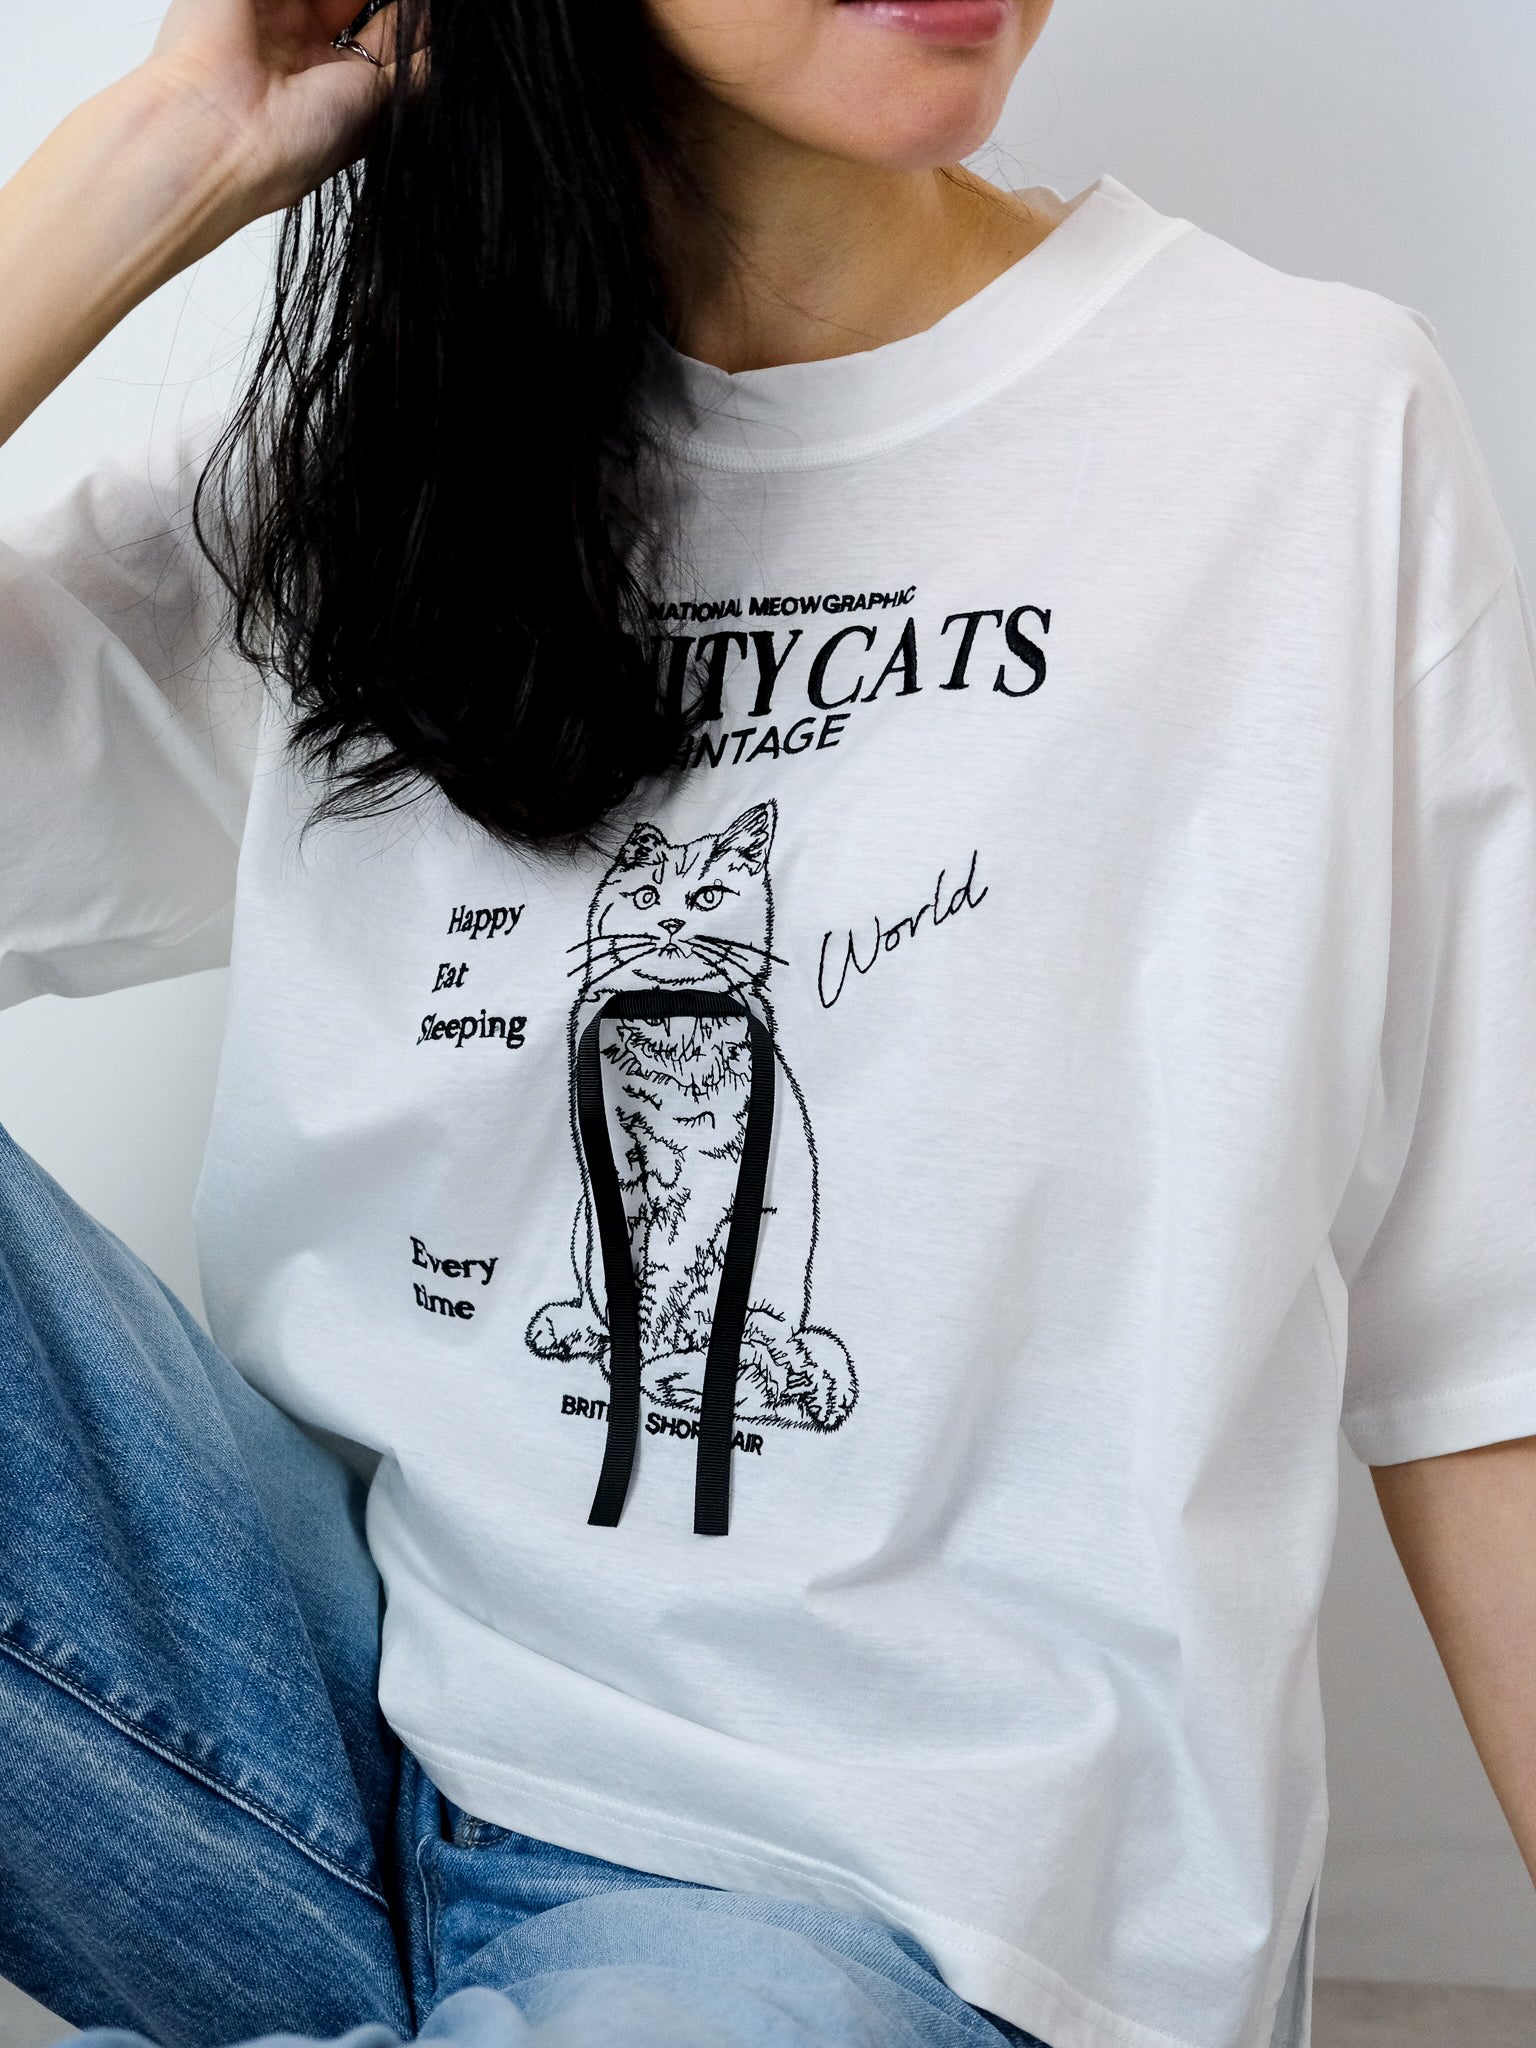 VANITY CAT　Tシャツ　[601021]